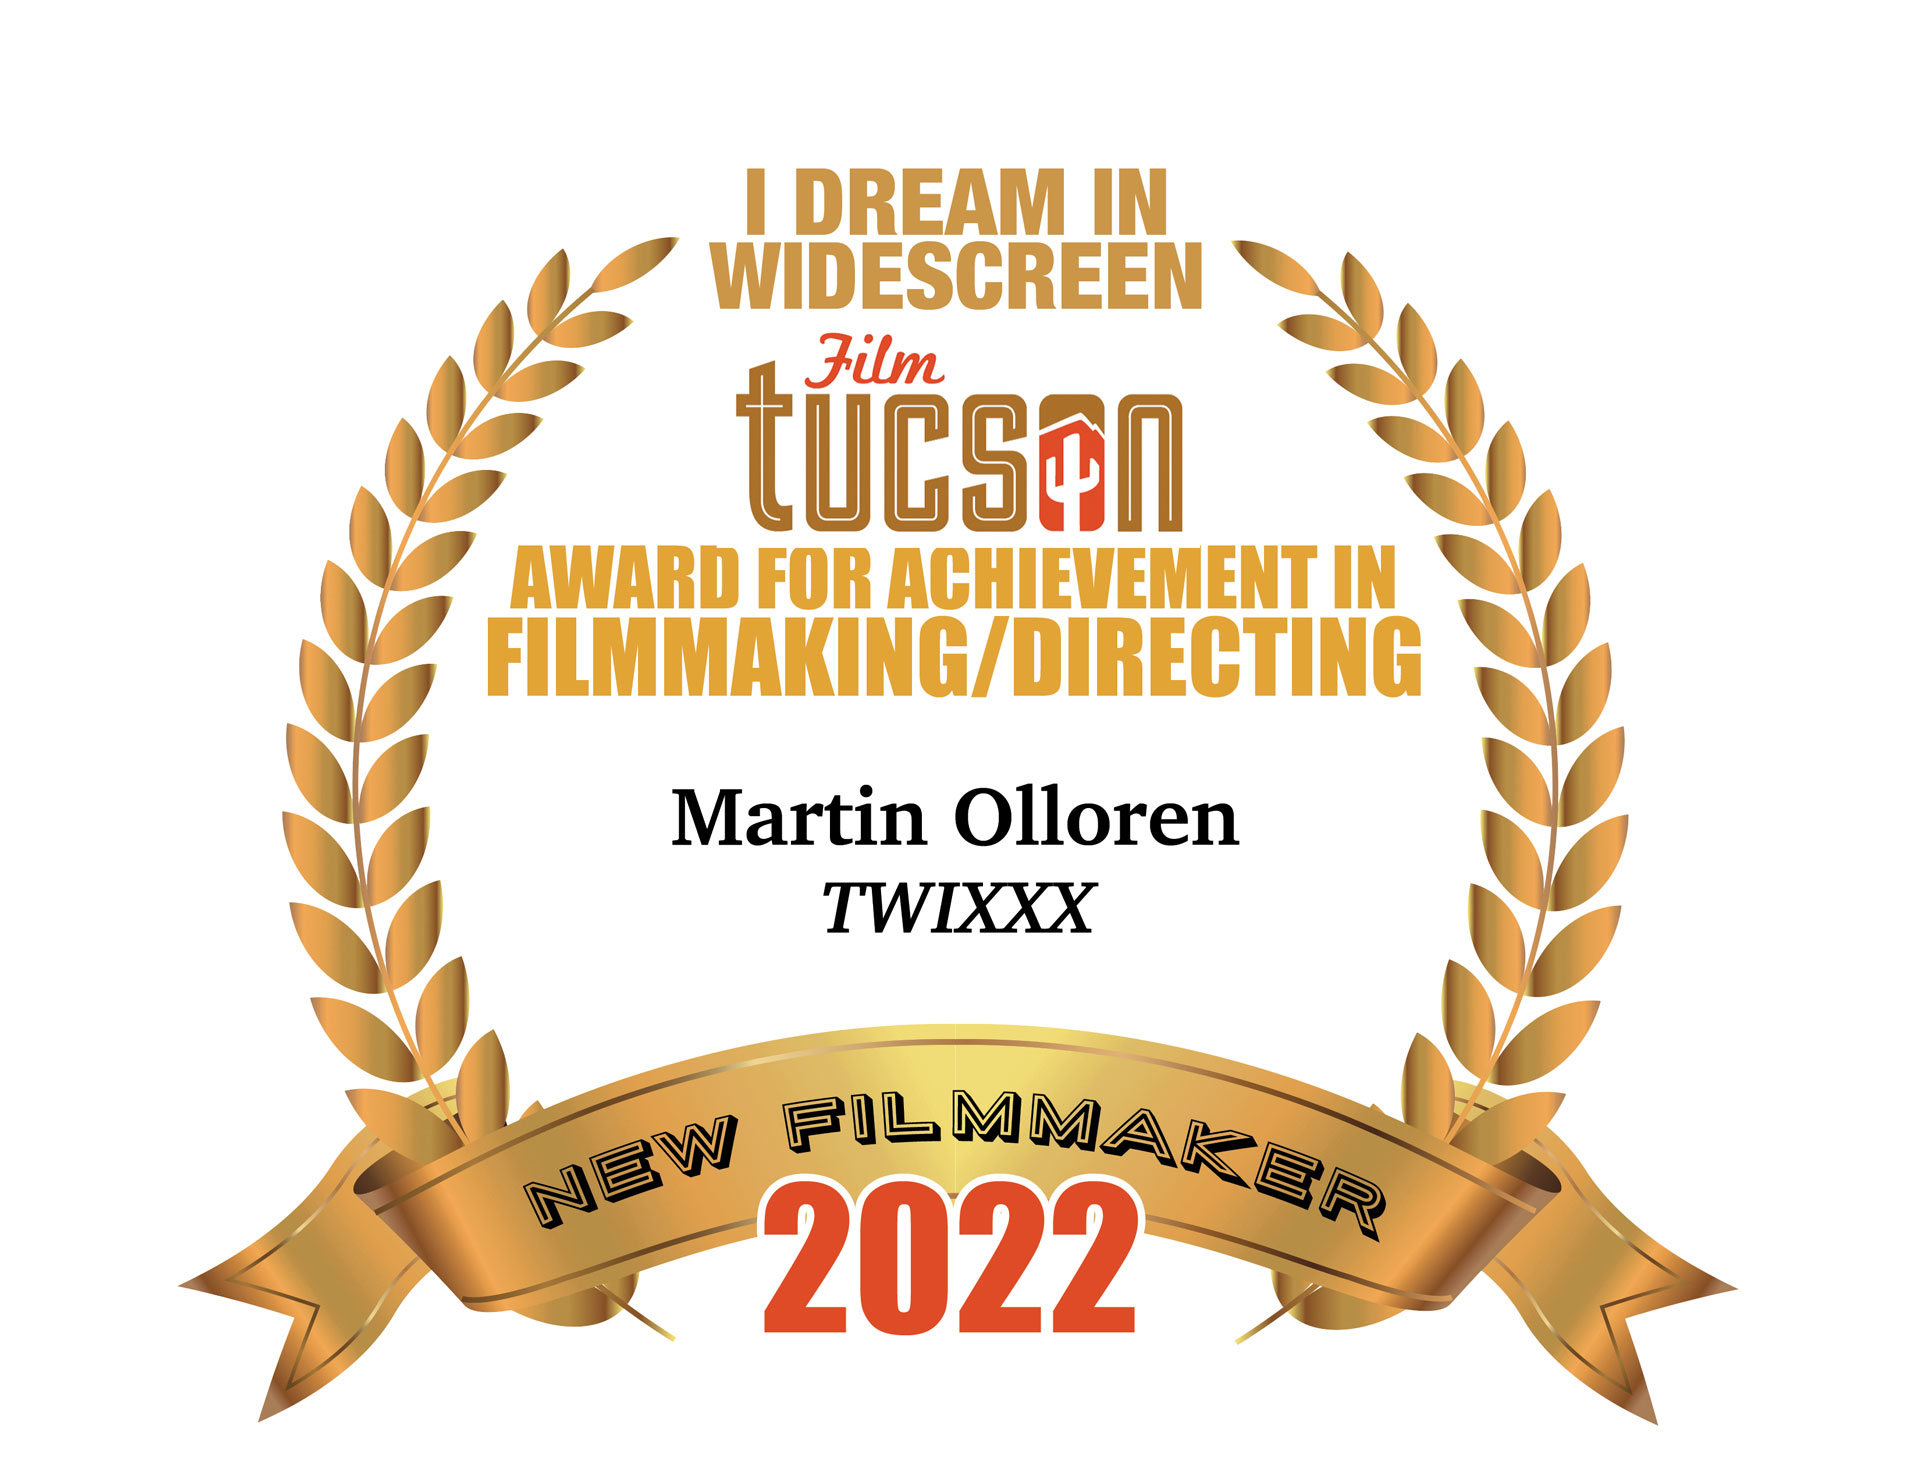 Film Tucson New Filmmaker Award for Achievement in Filmmaking/Directing